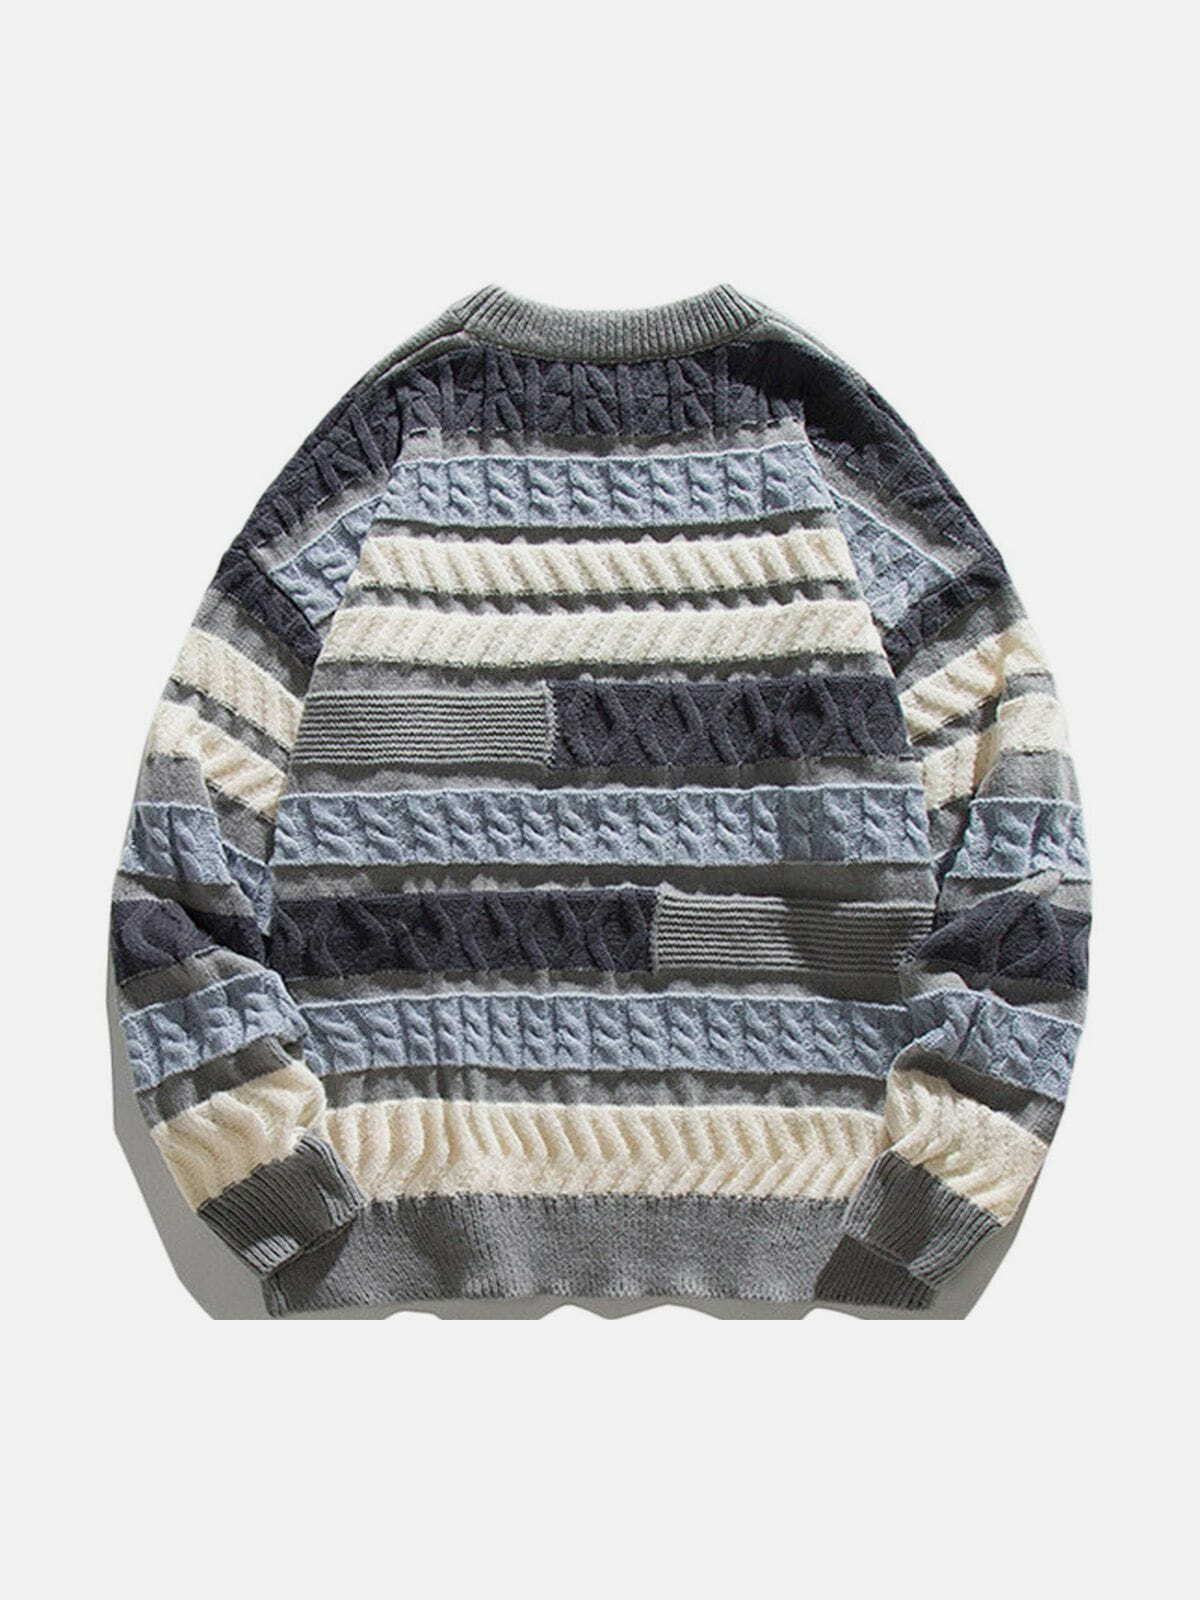 soft knit sweater retro chic statement piece 8330